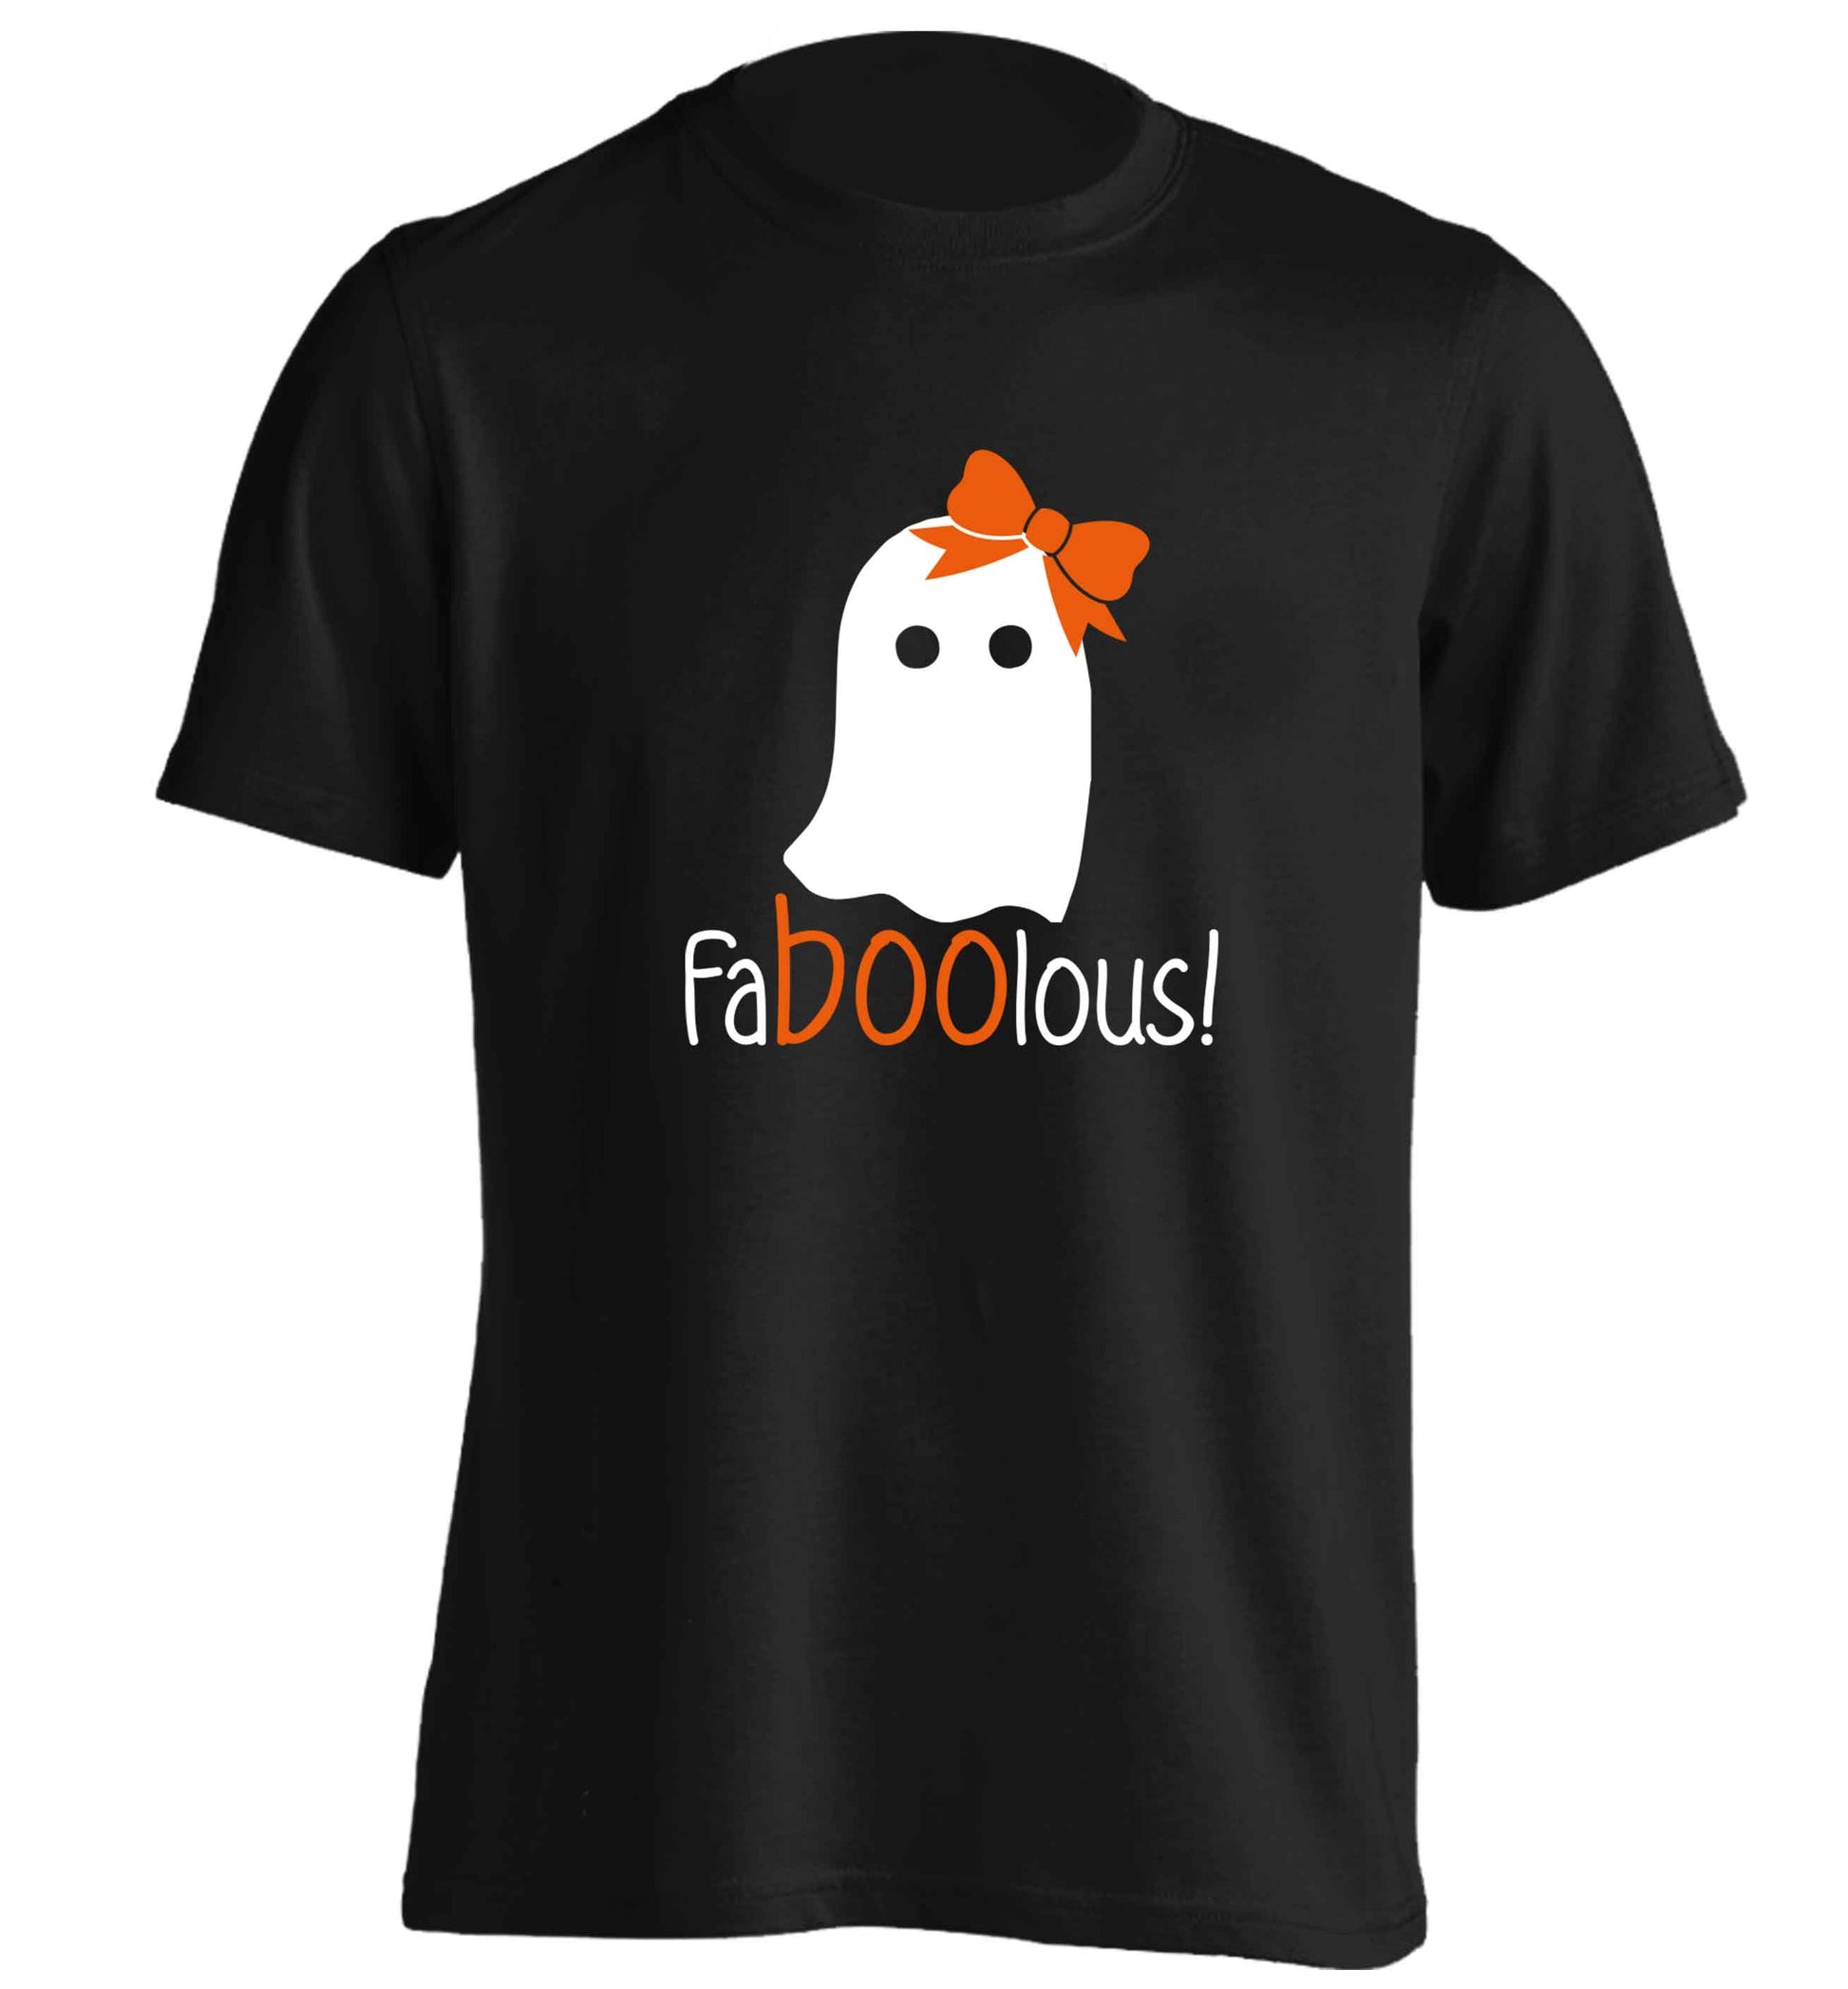 Faboolous ghost adults unisex black Tshirt 2XL